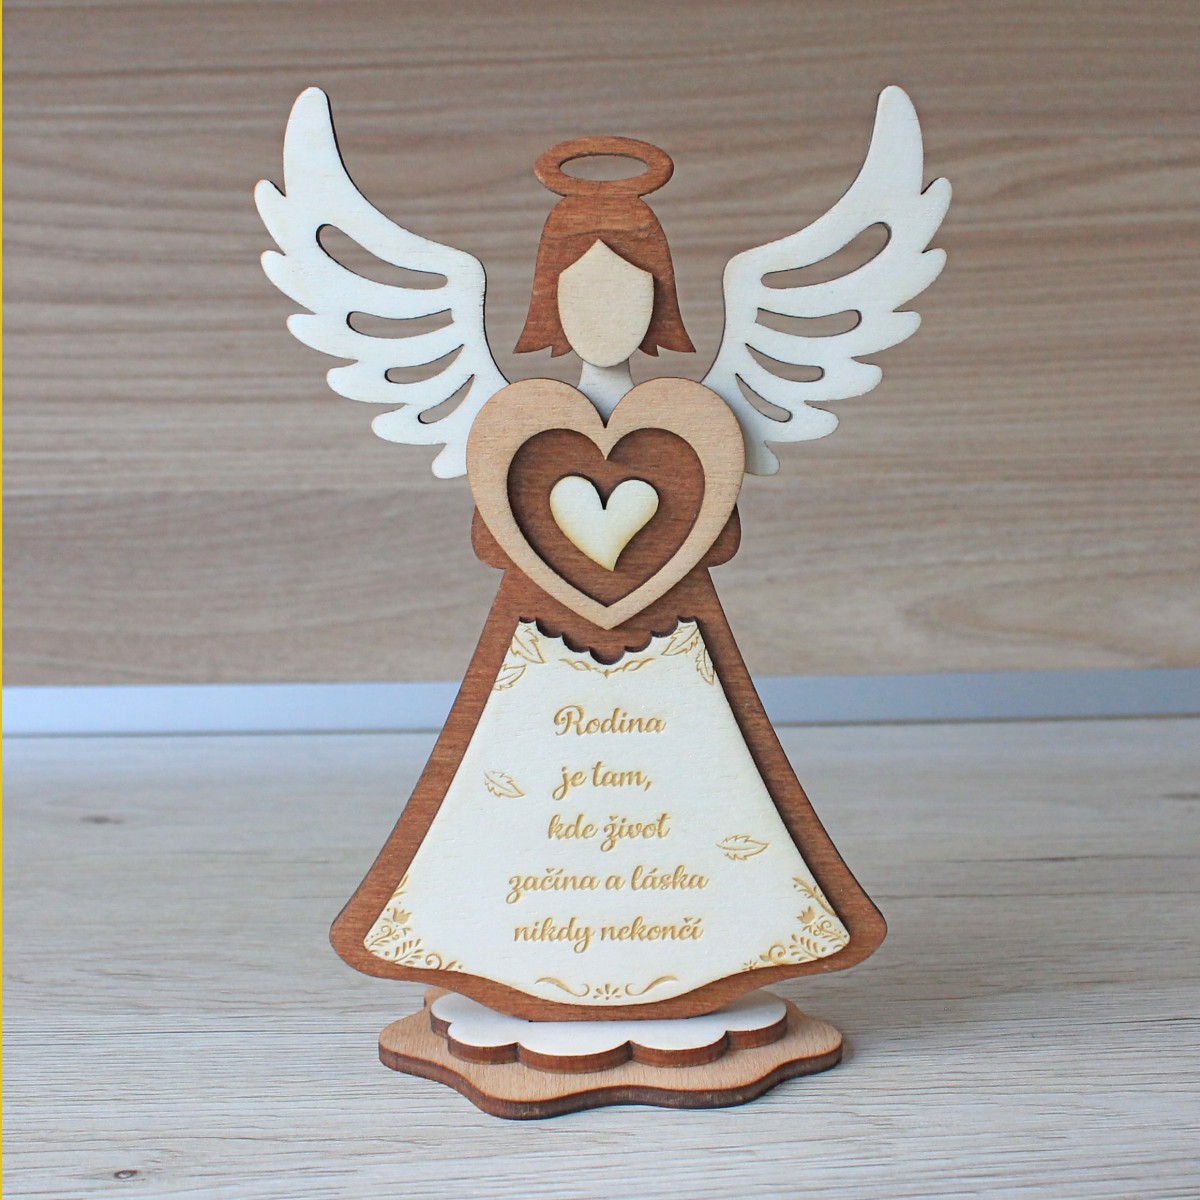 Drevená dekorácia anjel s gravírovaným textom: Rodina je tam, kde život začína a láska nikdy nekončí.